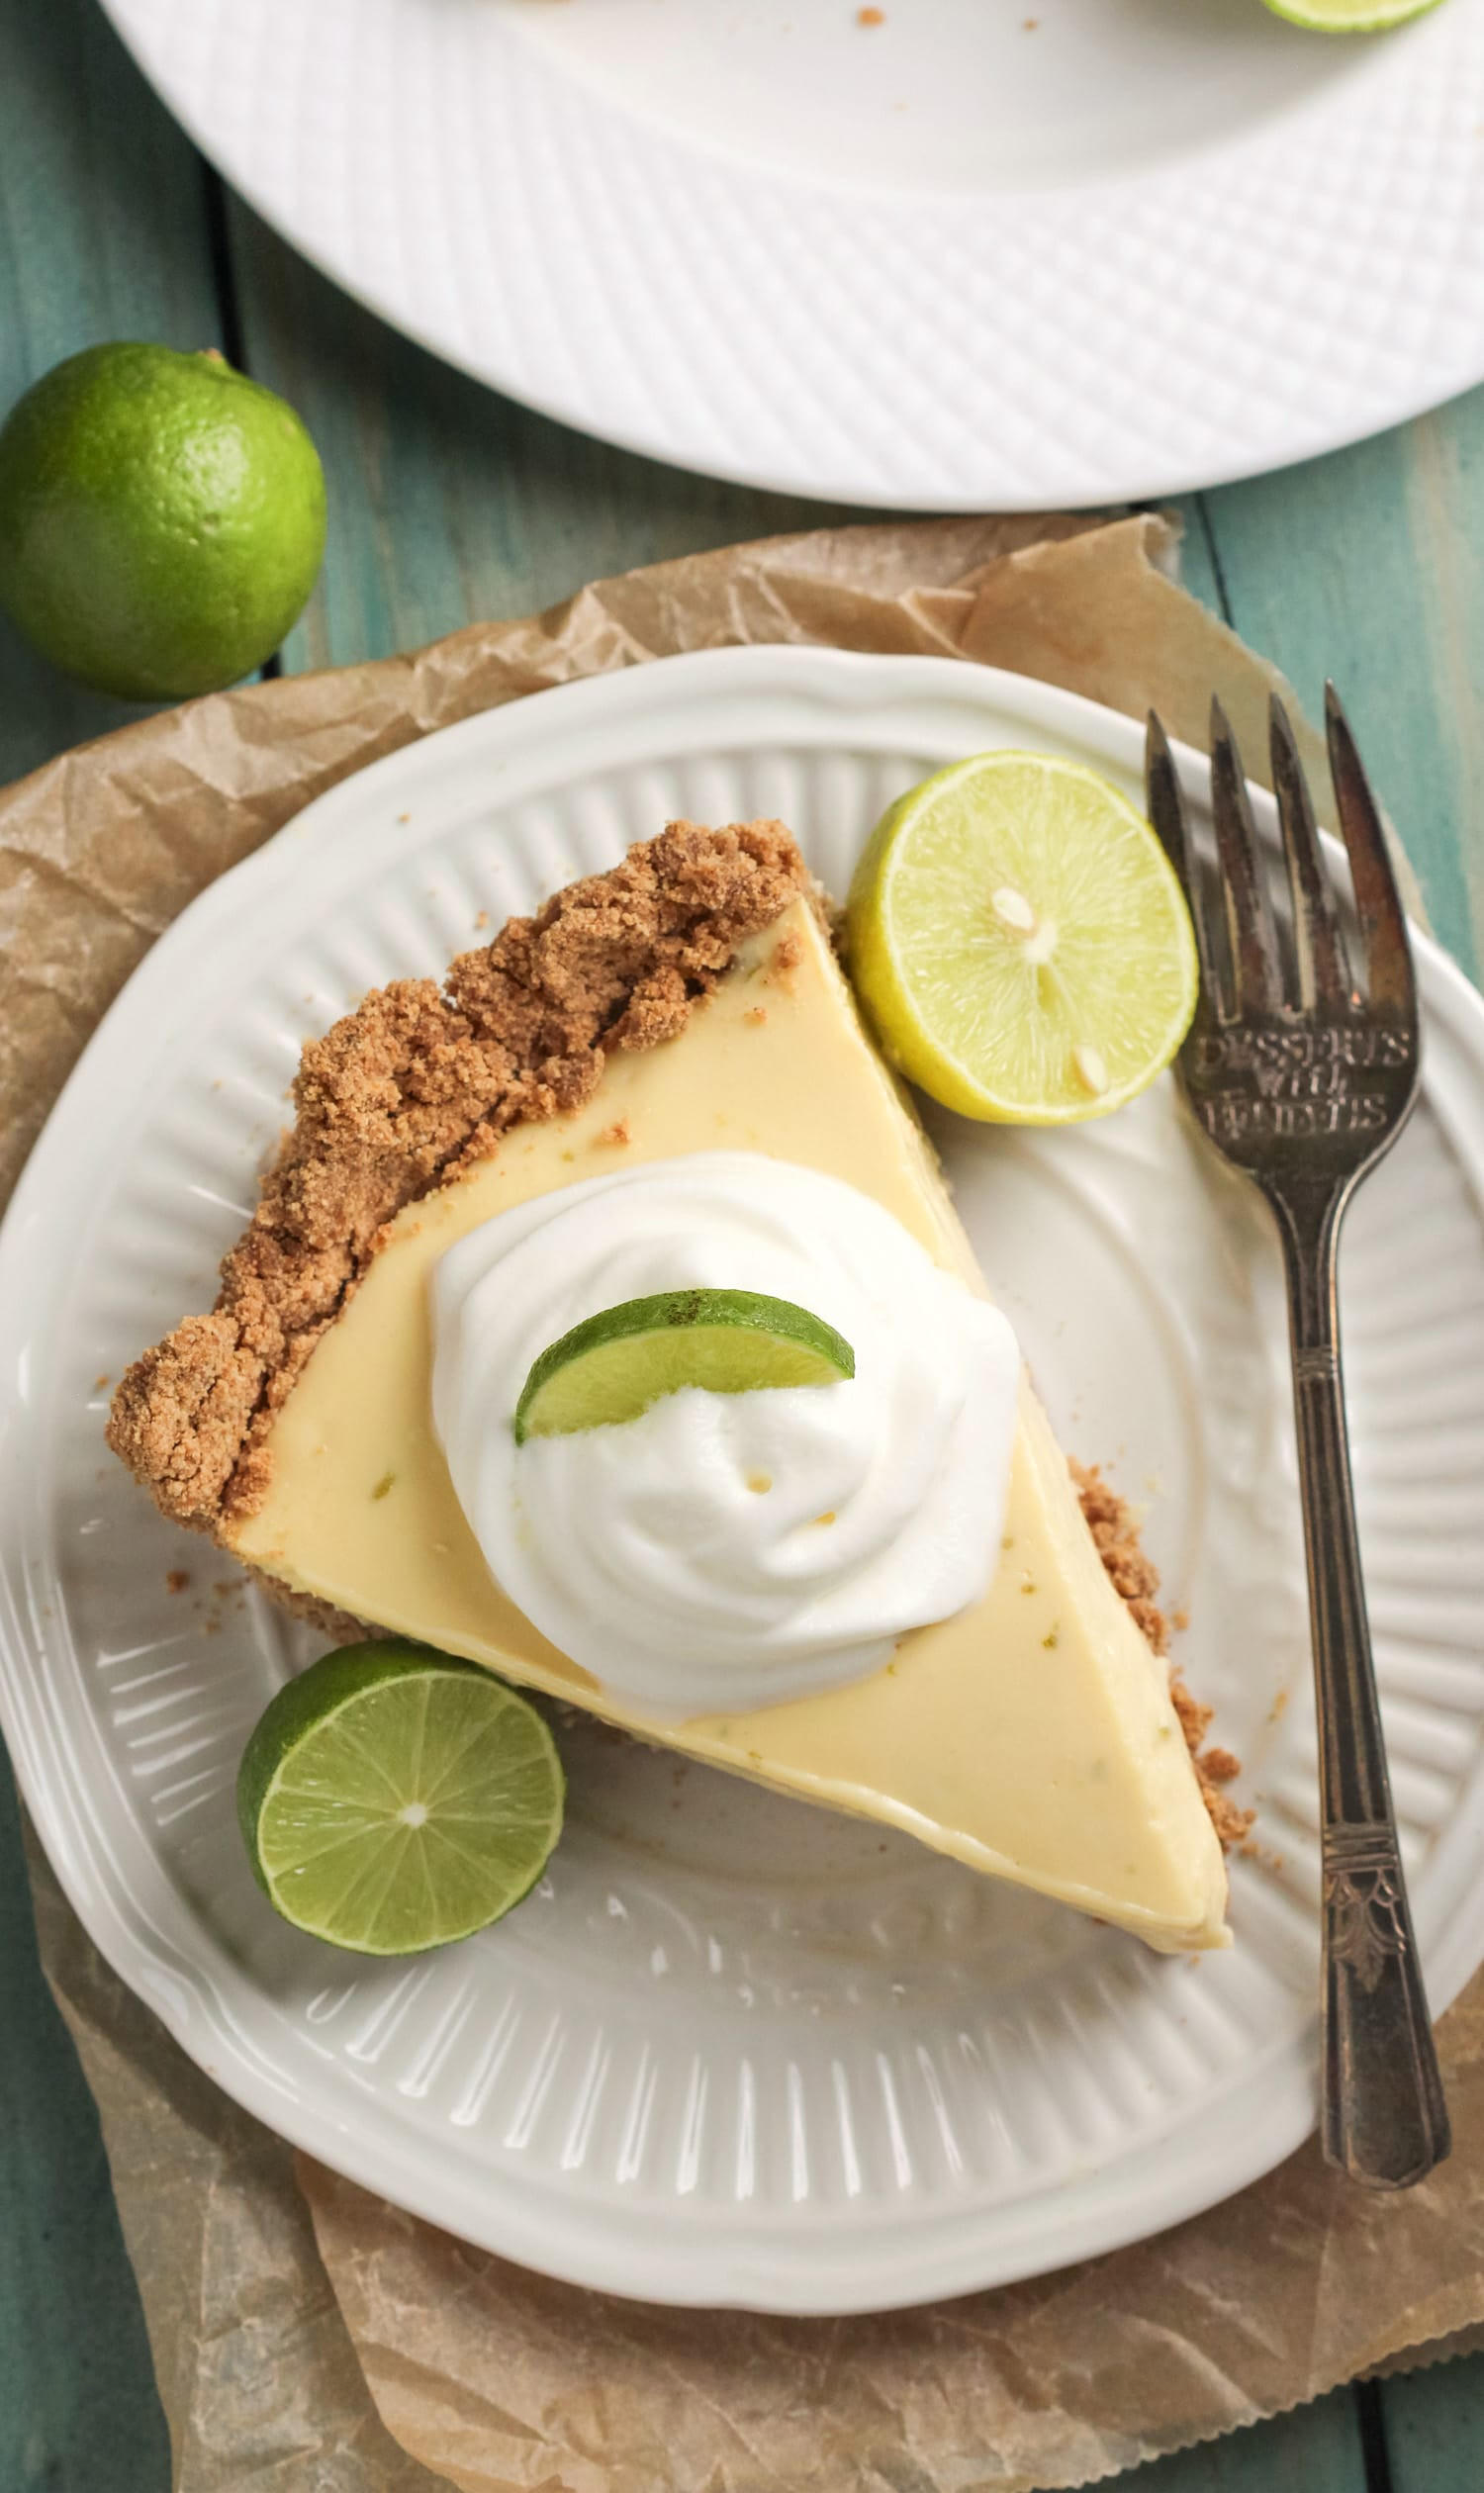 Low Fat Key Lime Pie
 Easy Healthy Key Lime Pie Recipe